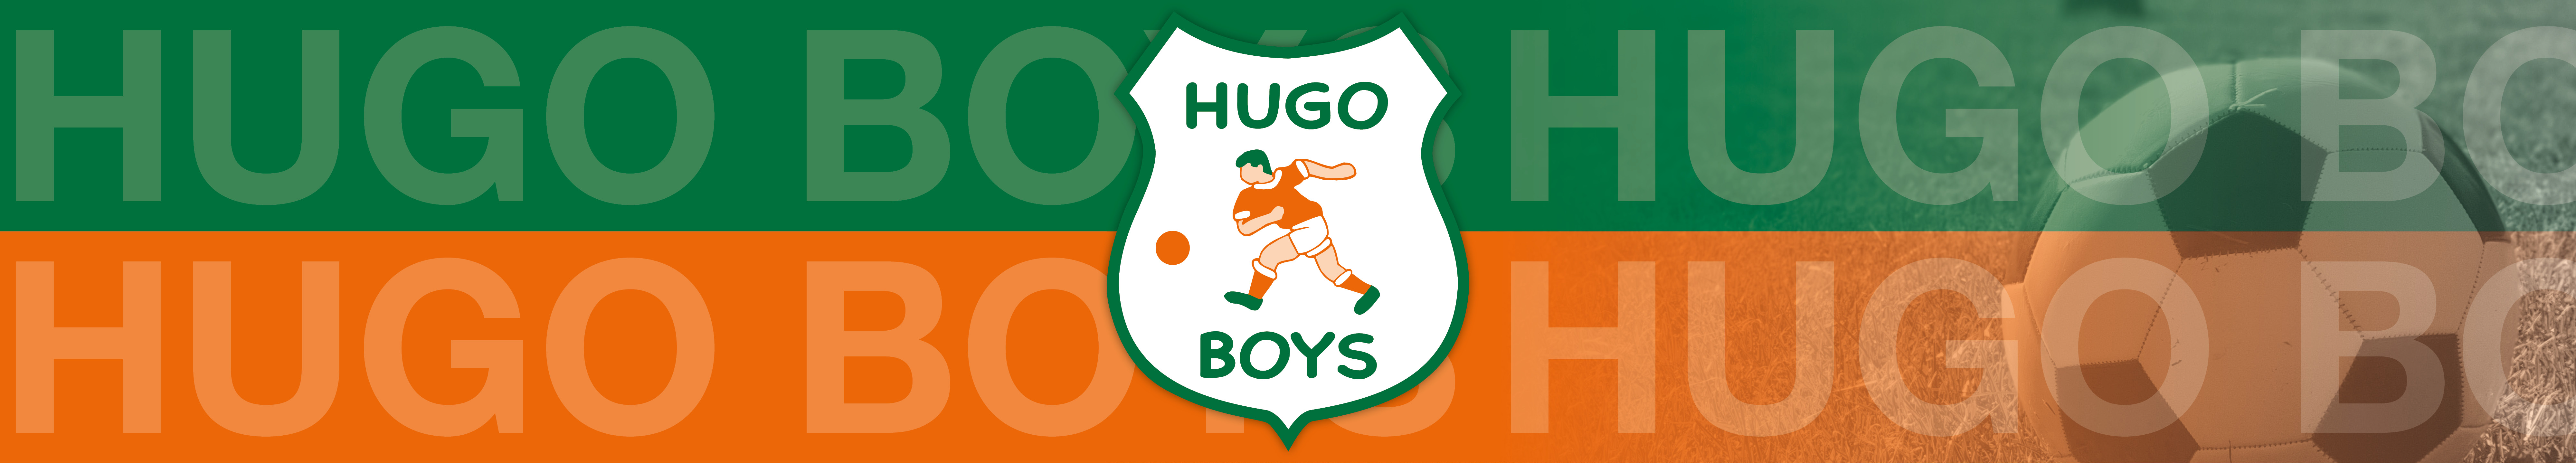 Hugo Boys Title Image